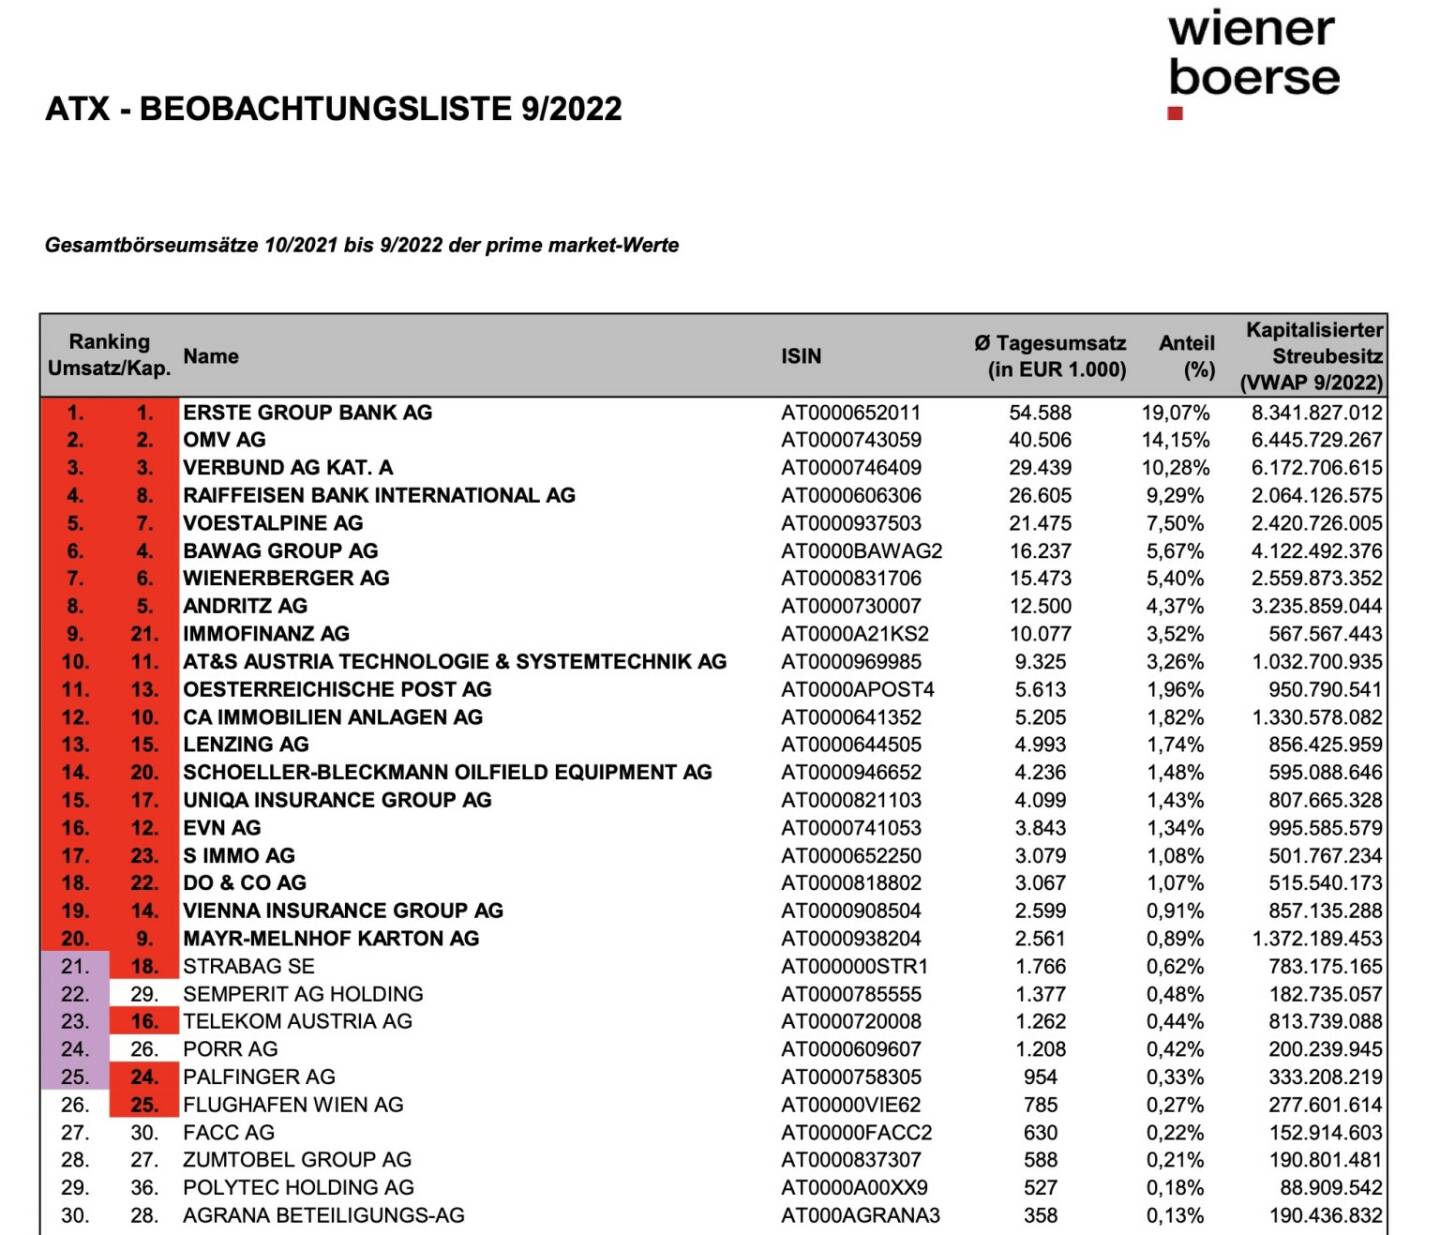 ATX Beobachtungsliste 9/2022 (c) Wiener Börse